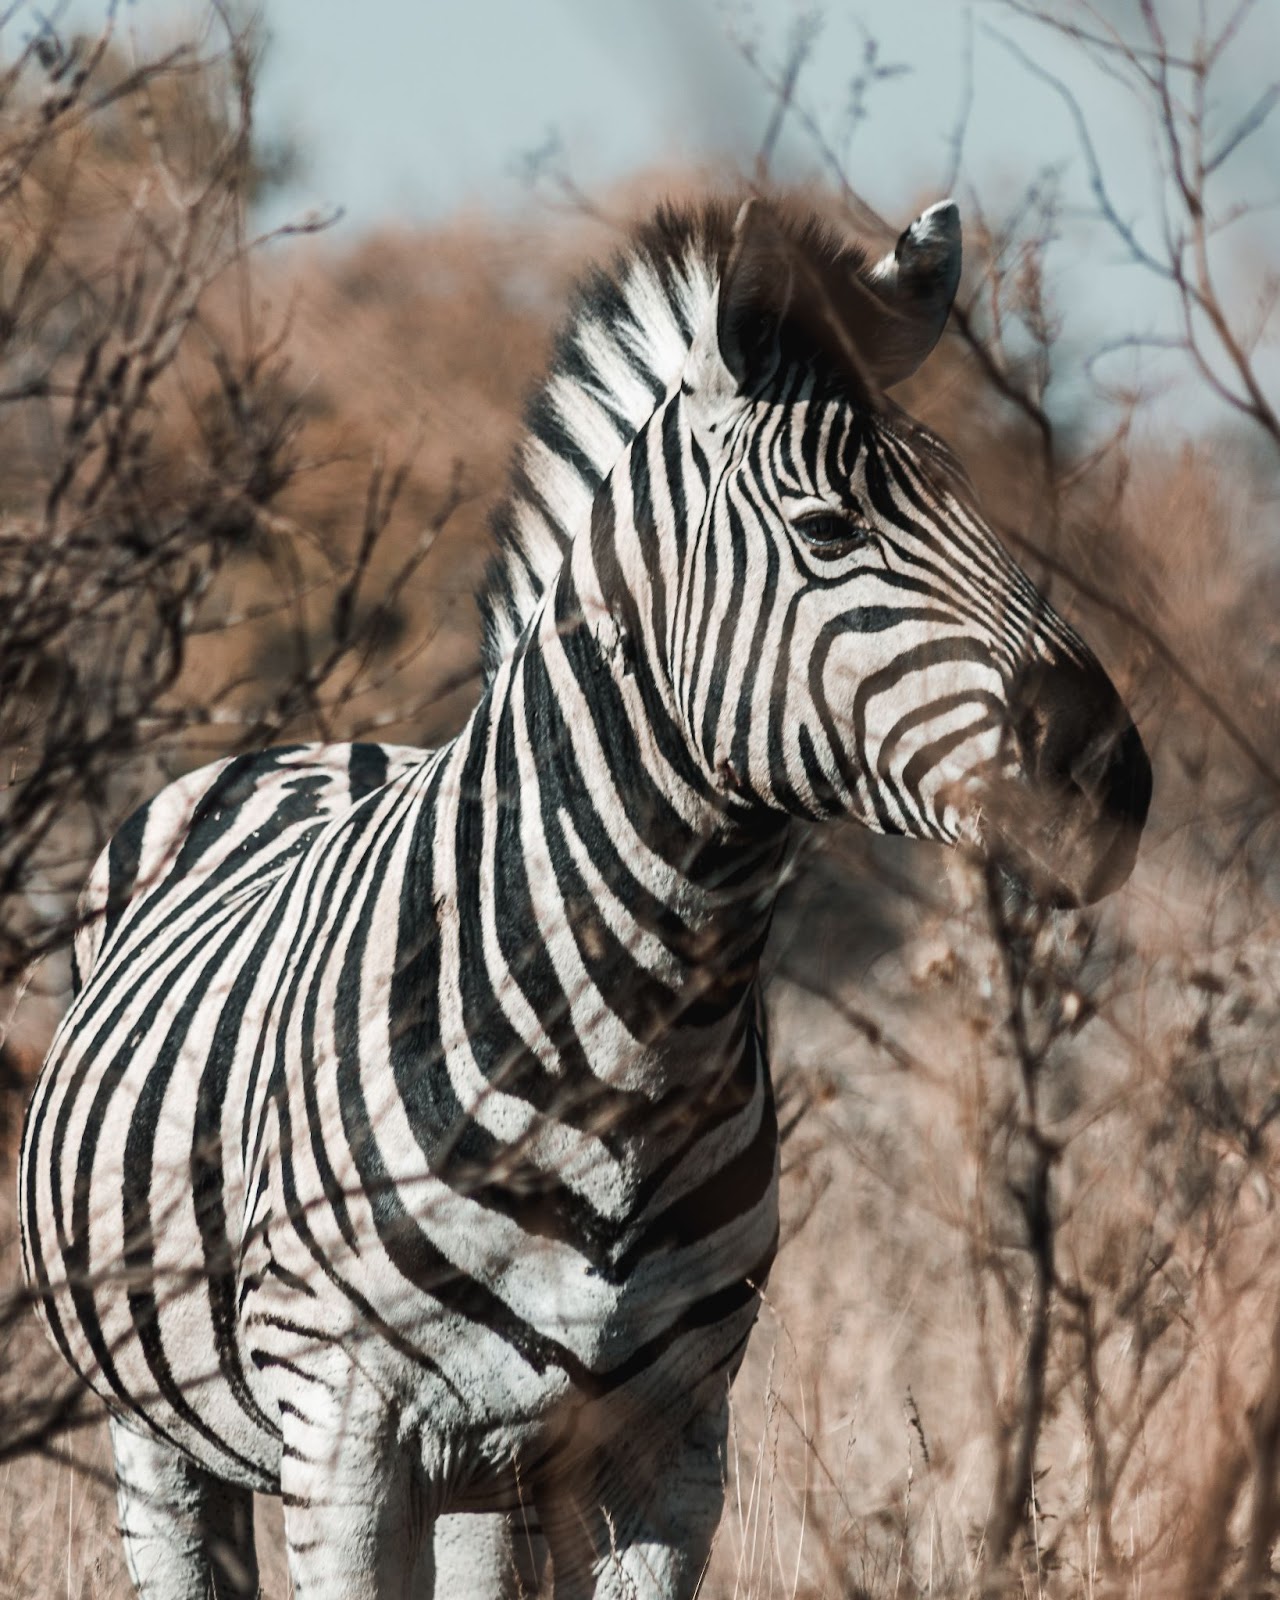 A solo zebra in the Kruger National Park